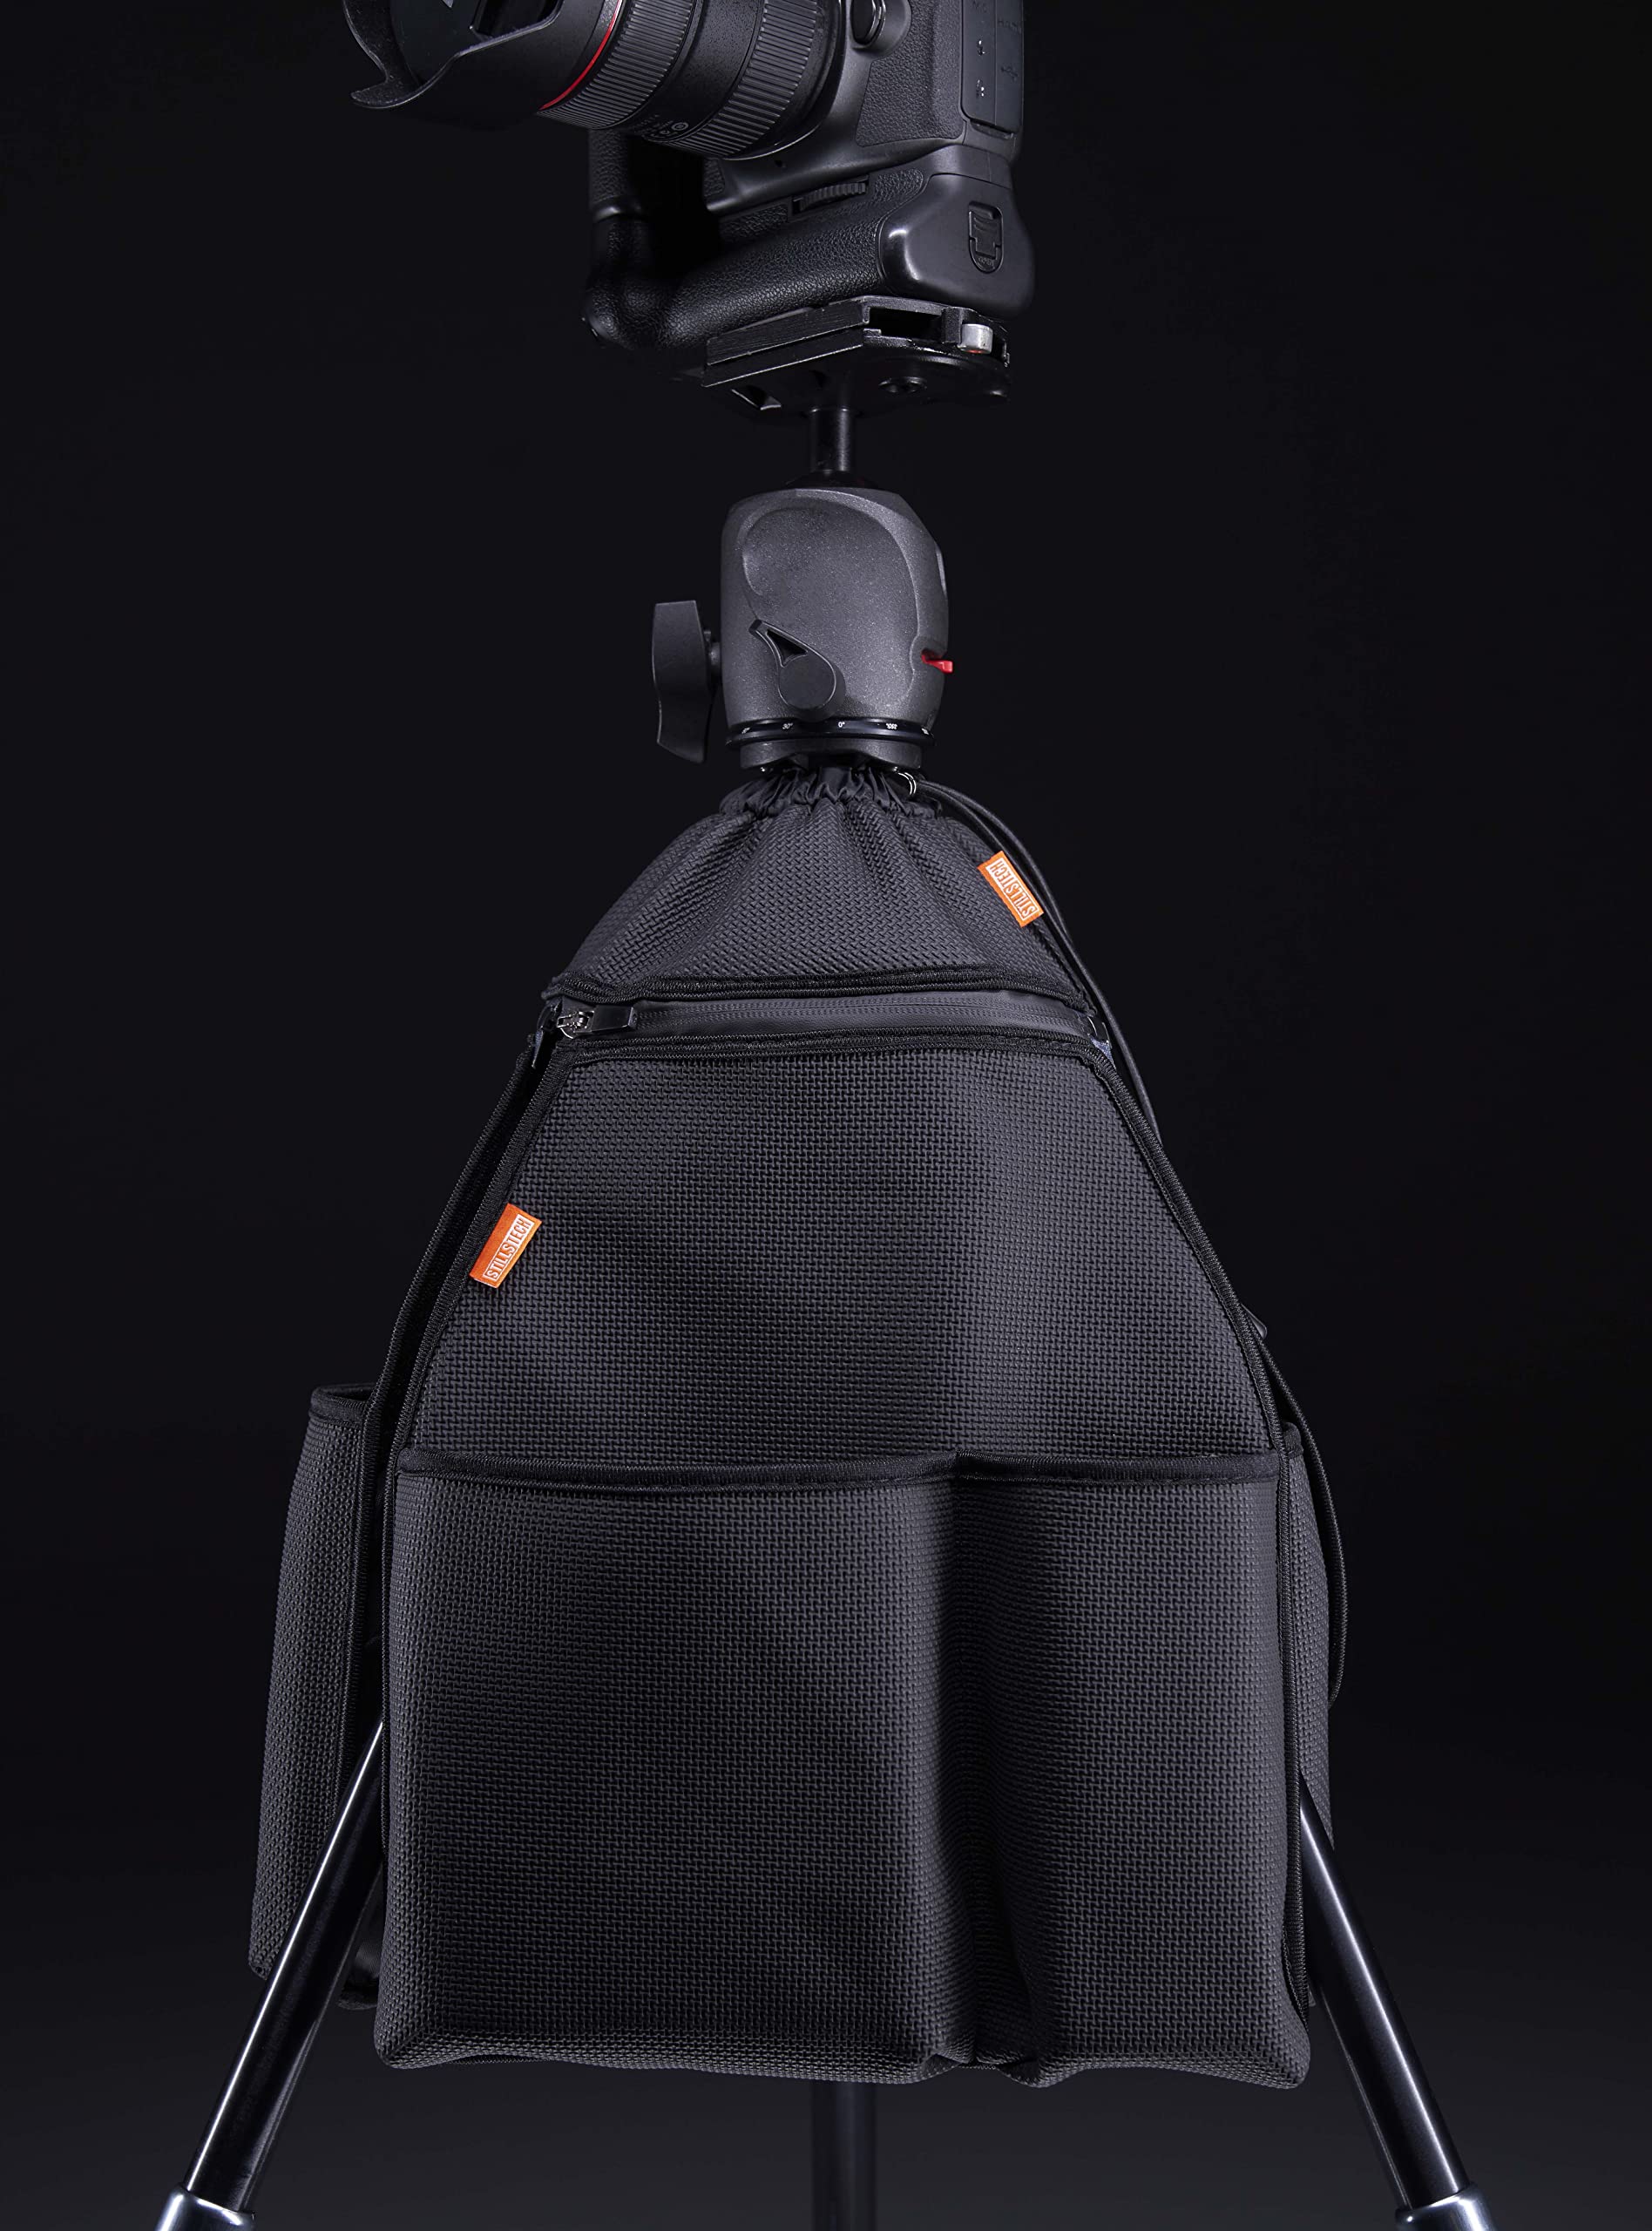 STILLSTECH TRIPBAG Tripod Gadget Carry Bag One Size Fits Most Tripod, Black (TBKS)